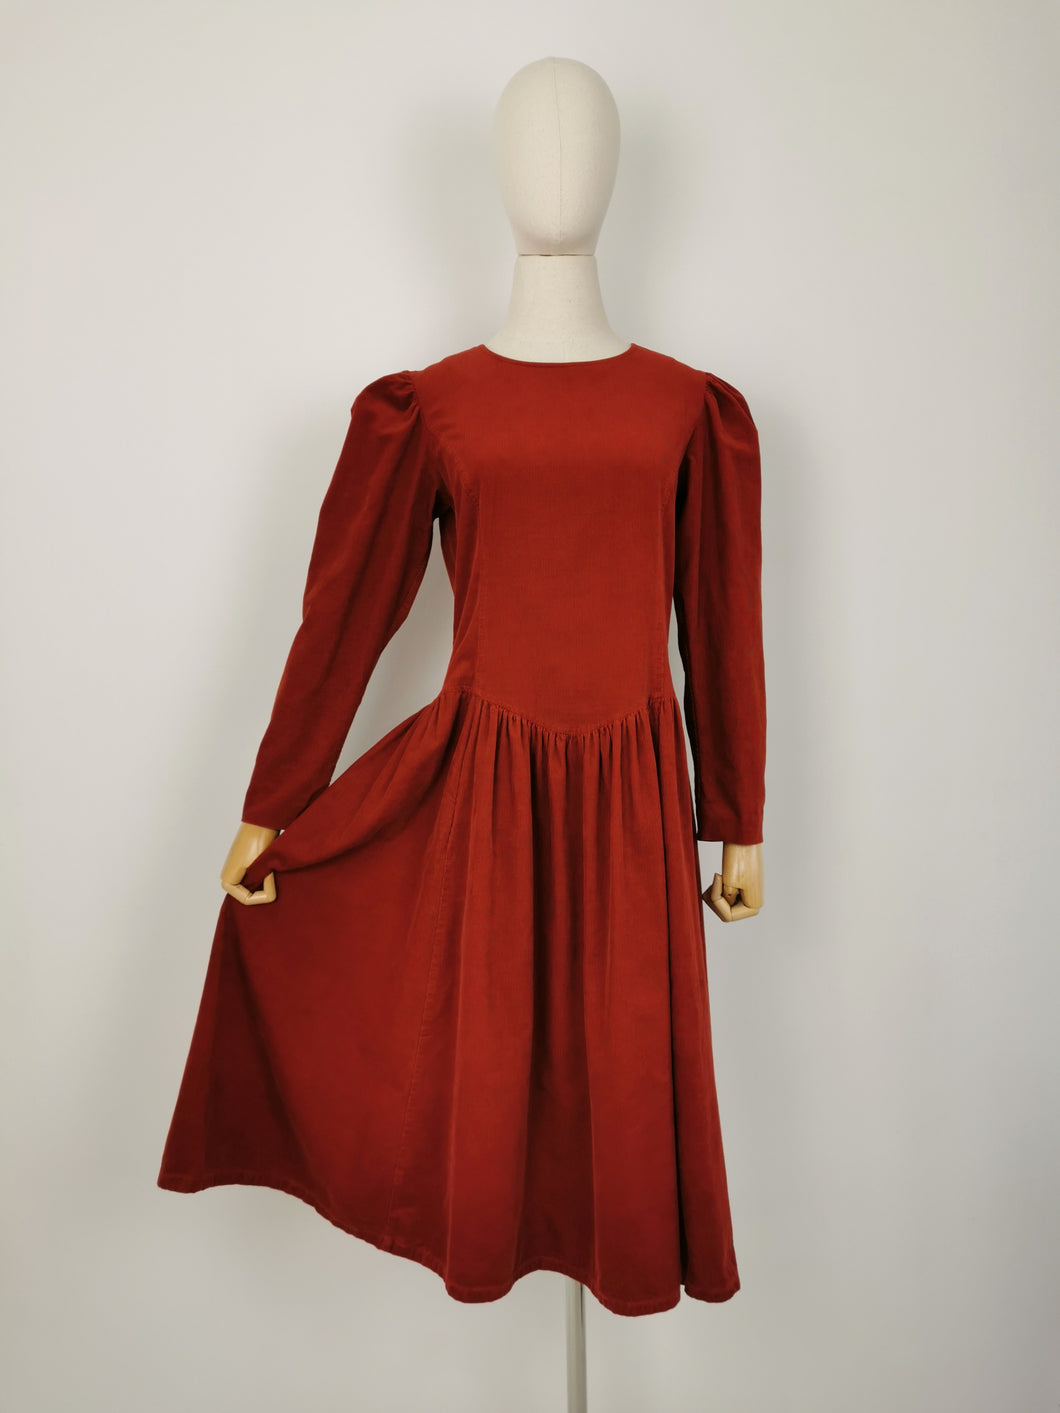 Vintage Laura Ashley corduroy dress